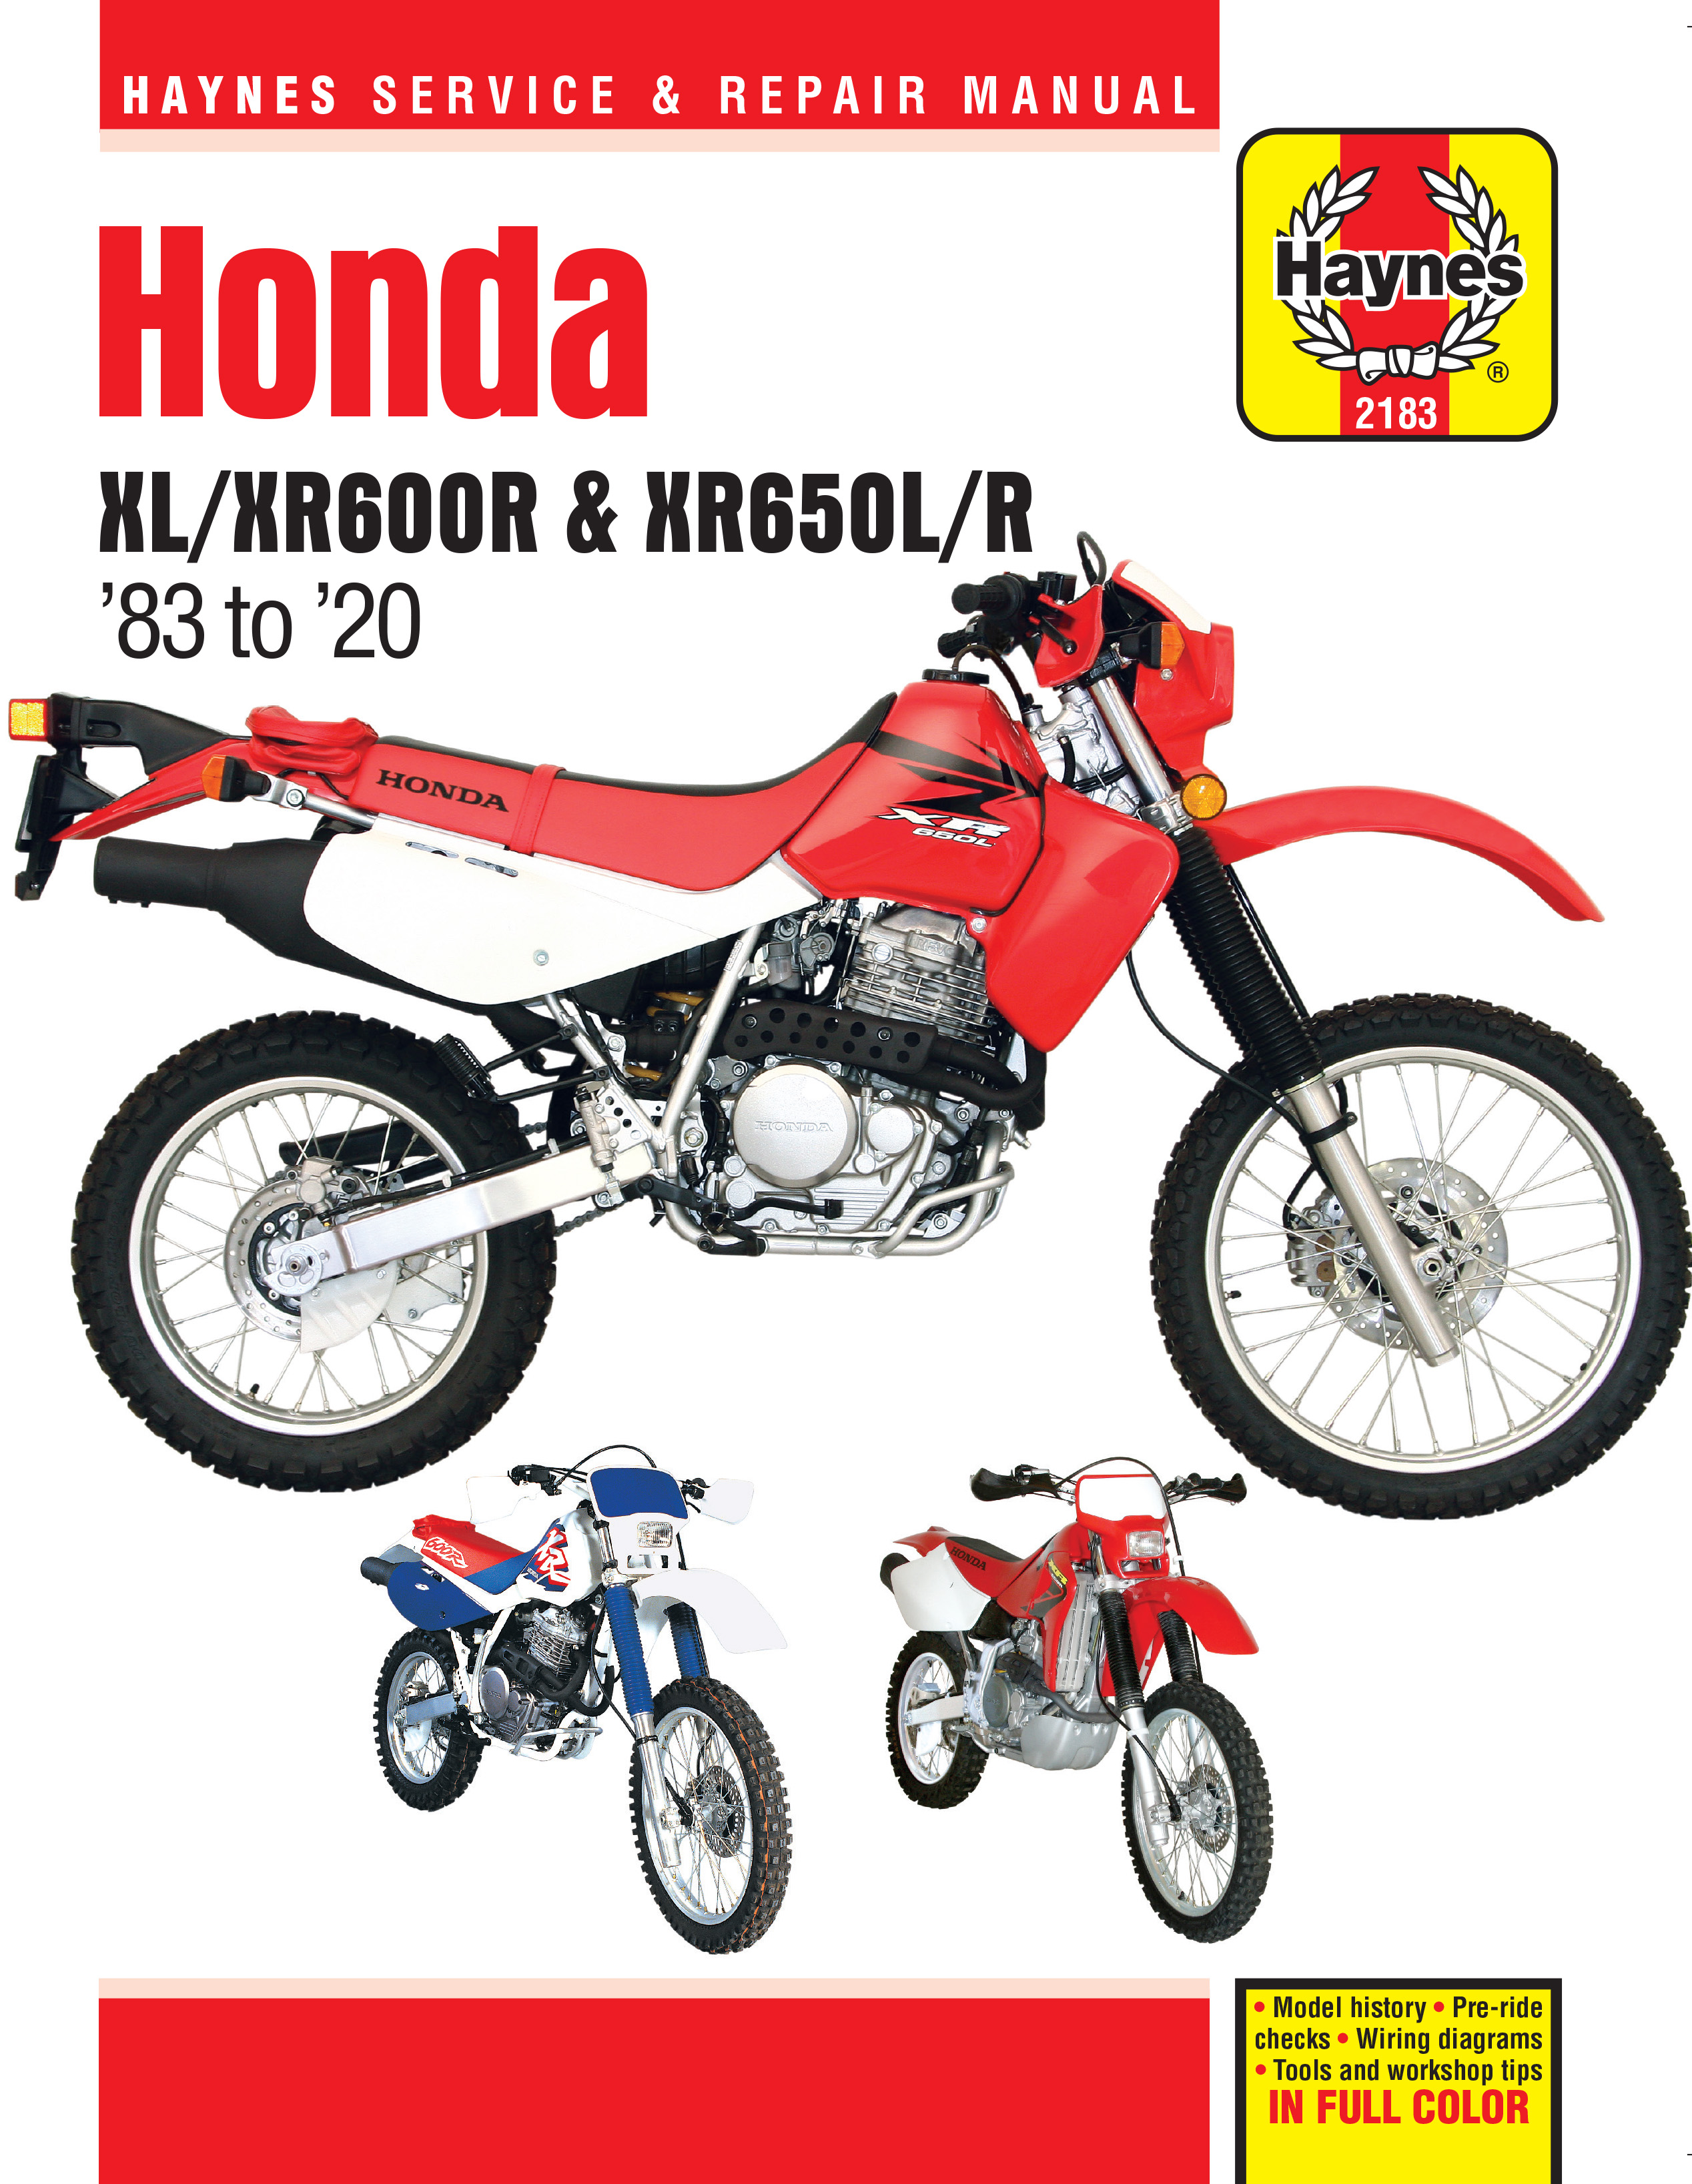 Honda Motorcycle XR650R Haynes Repair Manuals & Guides  2002 Xr650r Wiring Diagram    Haynes Manuals